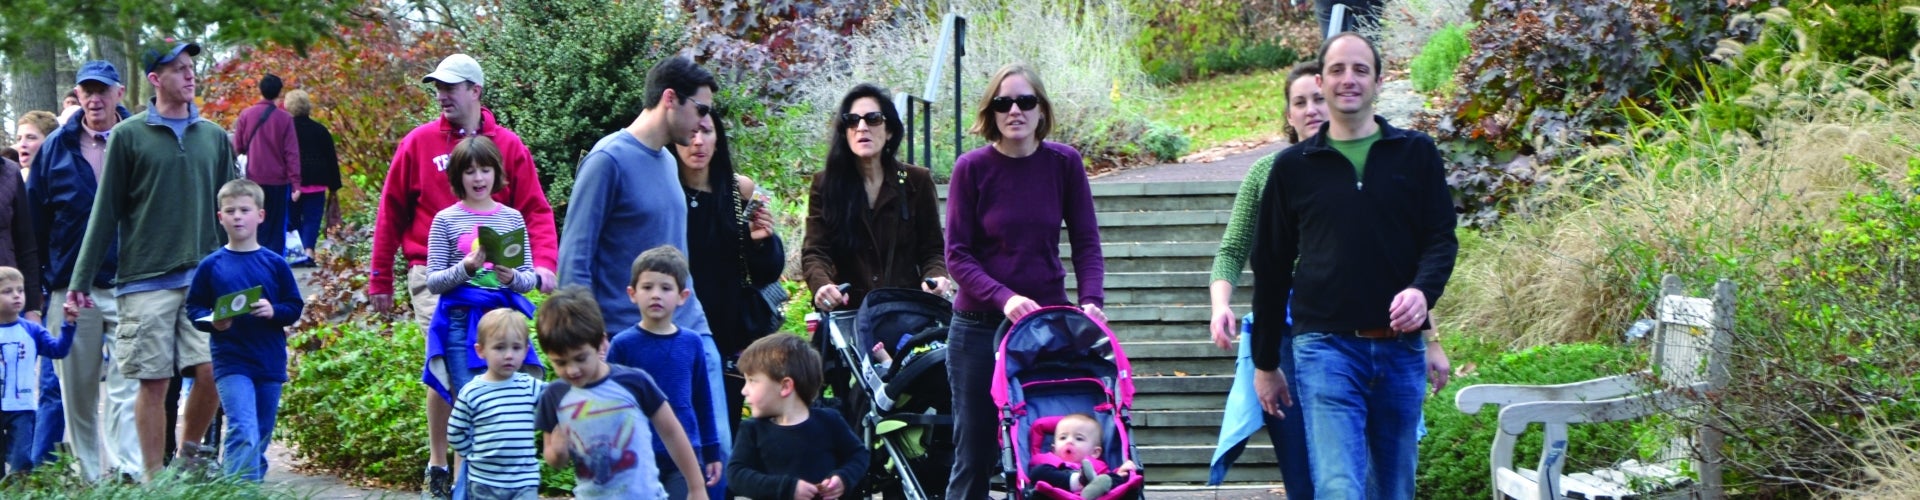 A large group of multiple families walk through a public garden. 